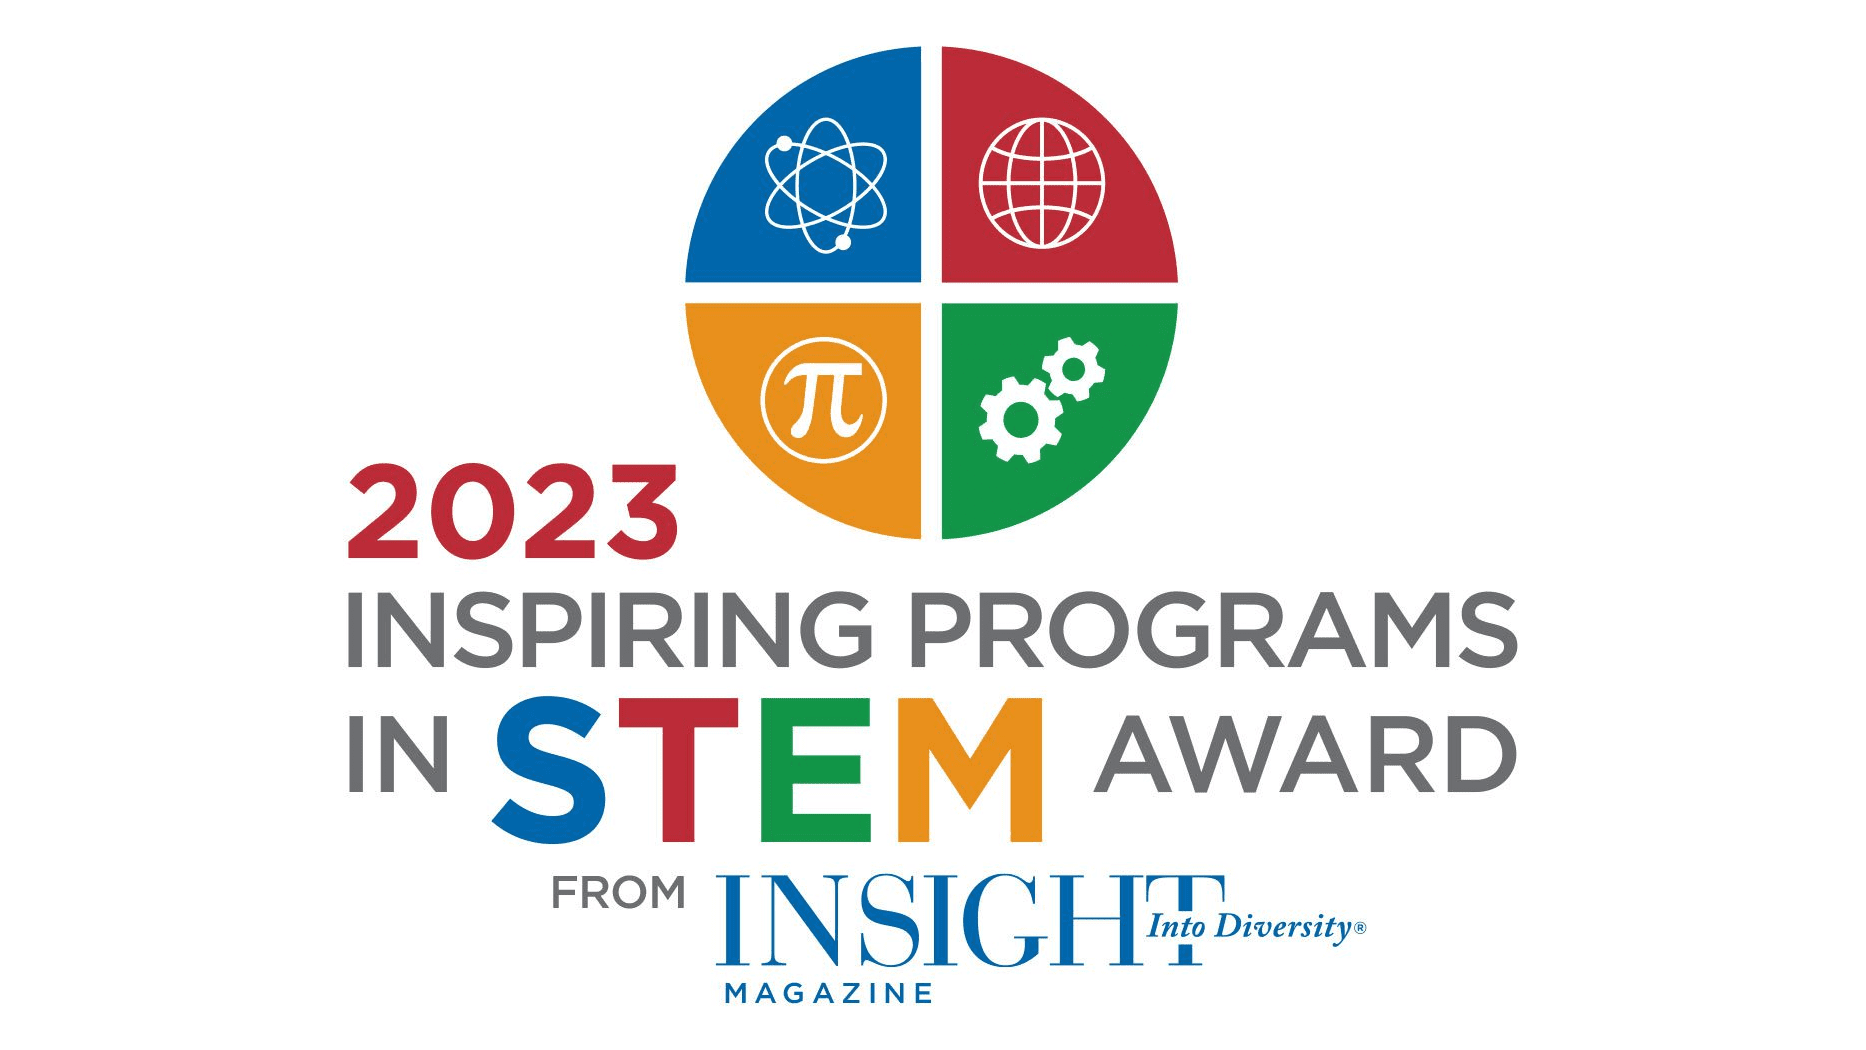 2023 Inspiring Programs in STEM Award from INSIGHT Into Diversity Magazine logo